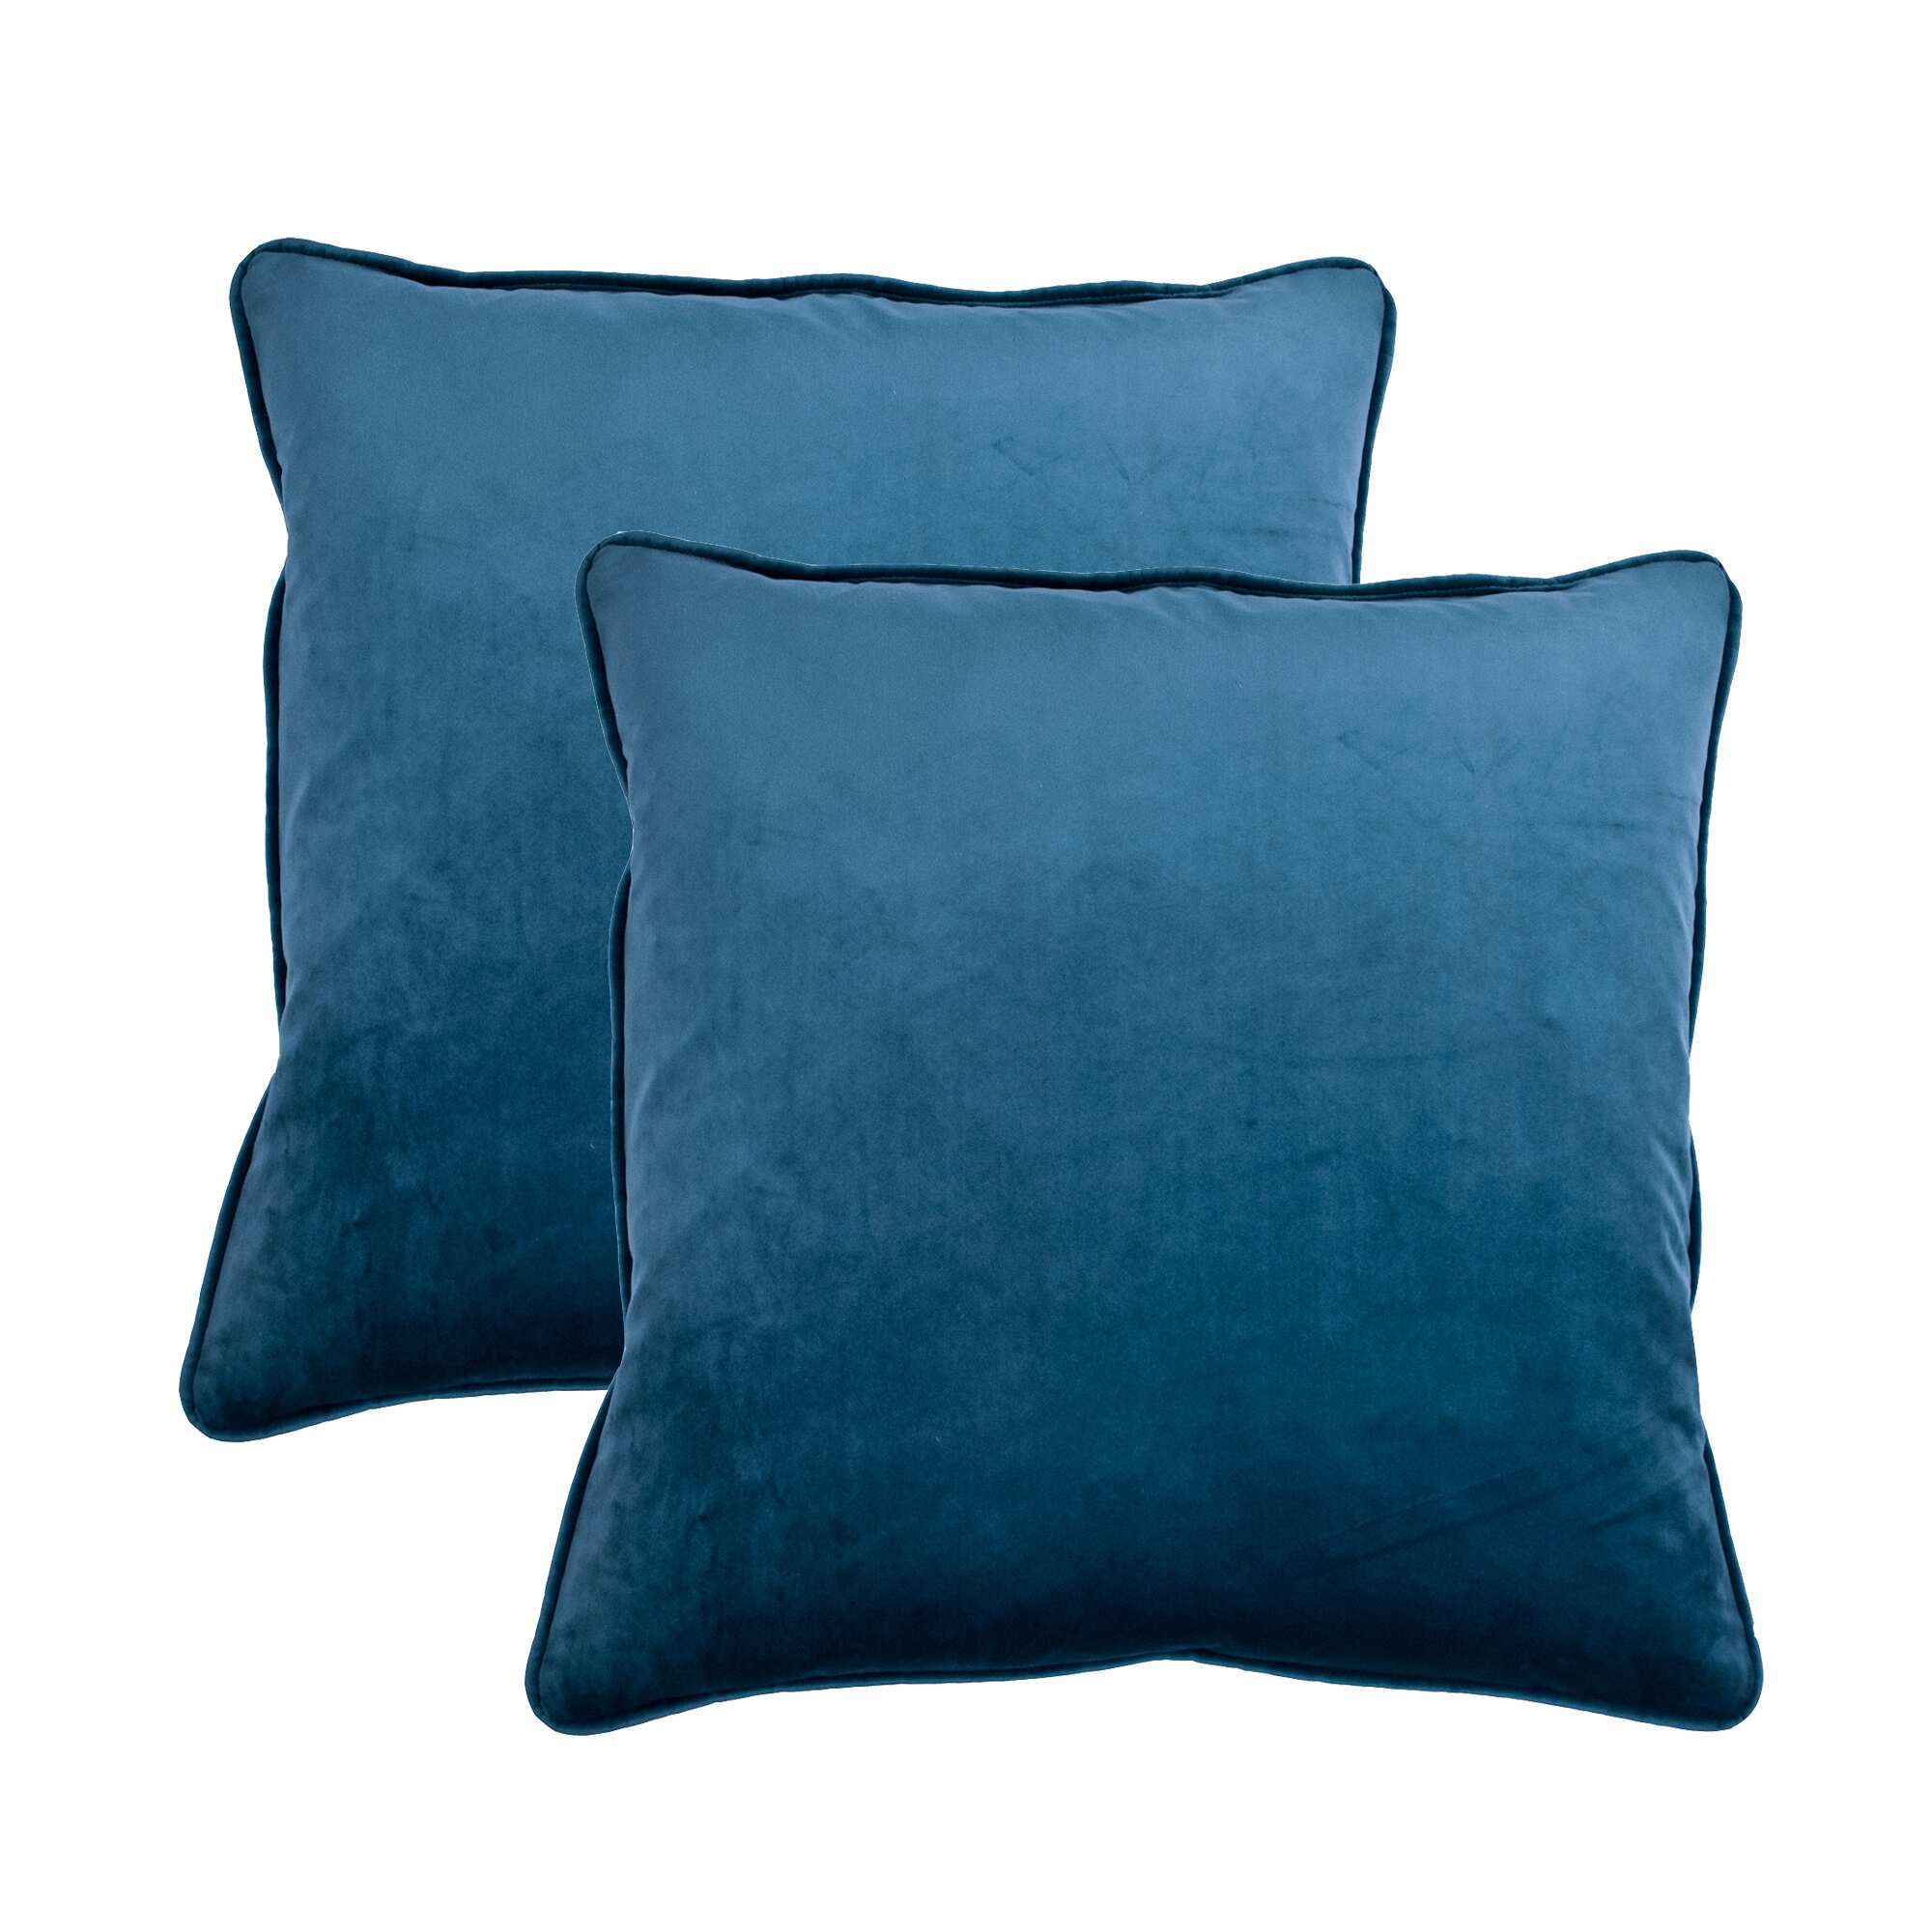 Sherry Kline Richmond Velvet 20-inch Throw Pillow (set of 2)